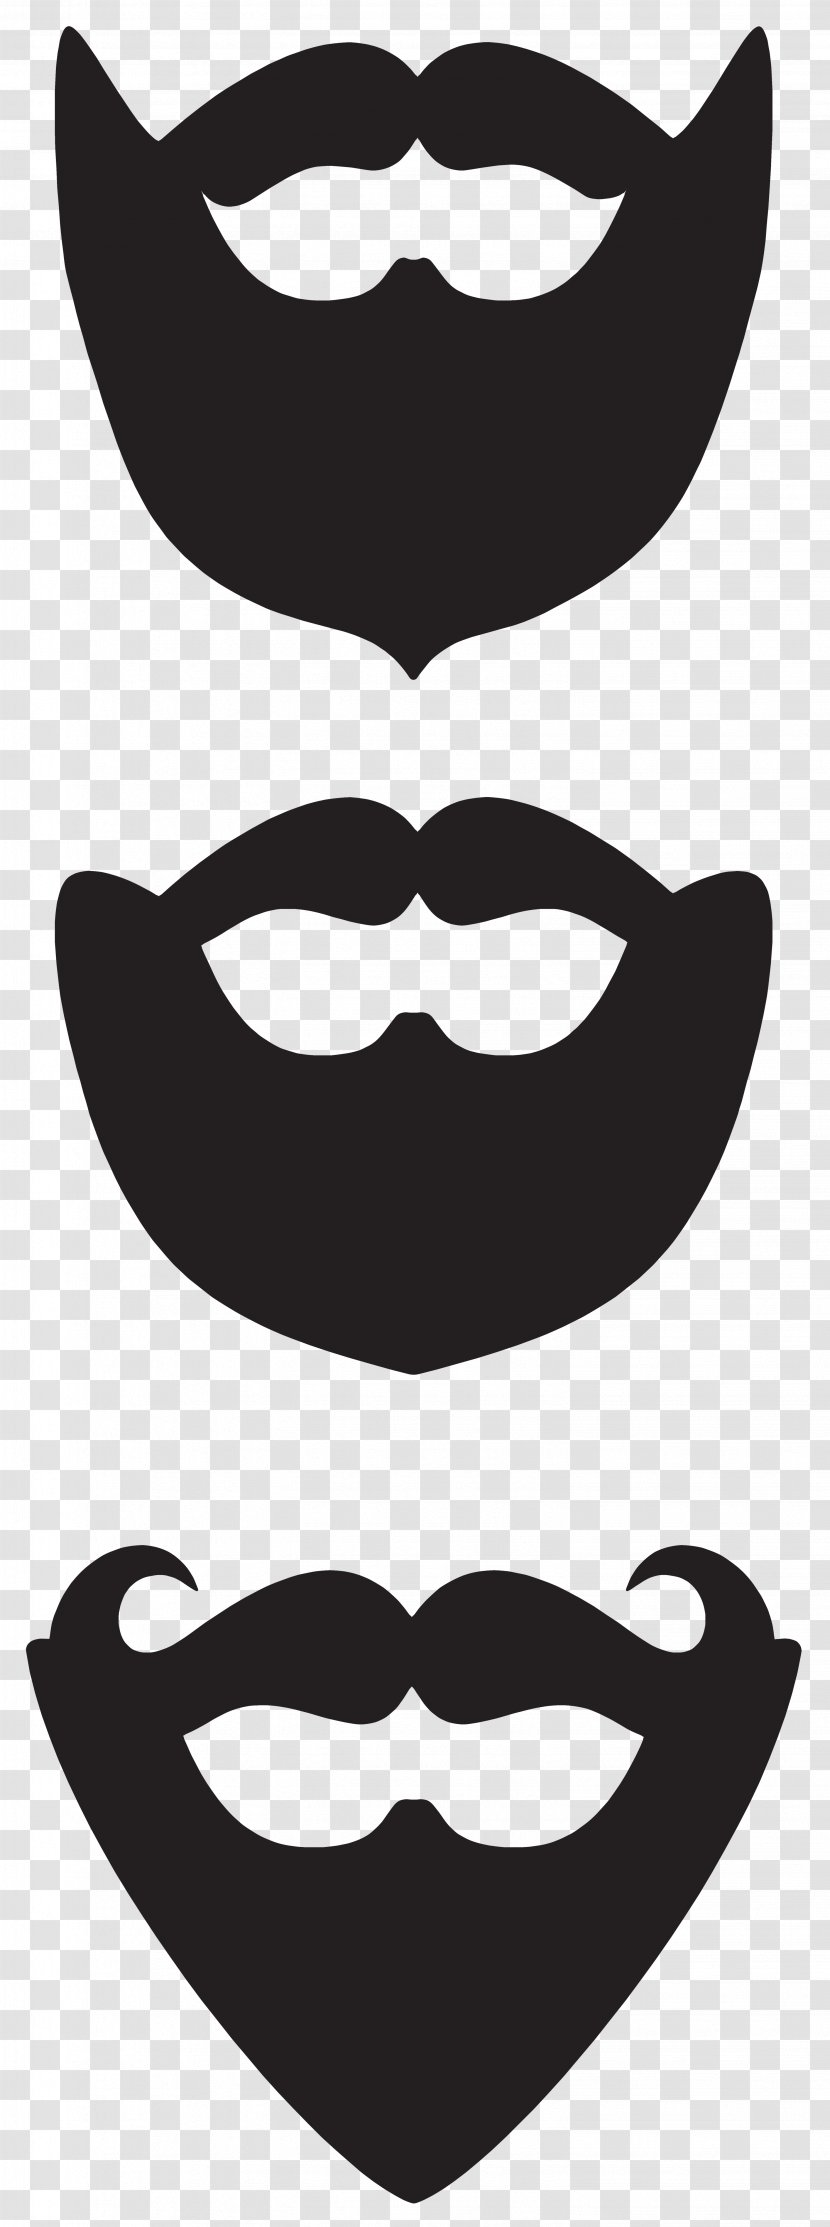 Movember Beard Clip Art - Smile - Beards Image Transparent PNG